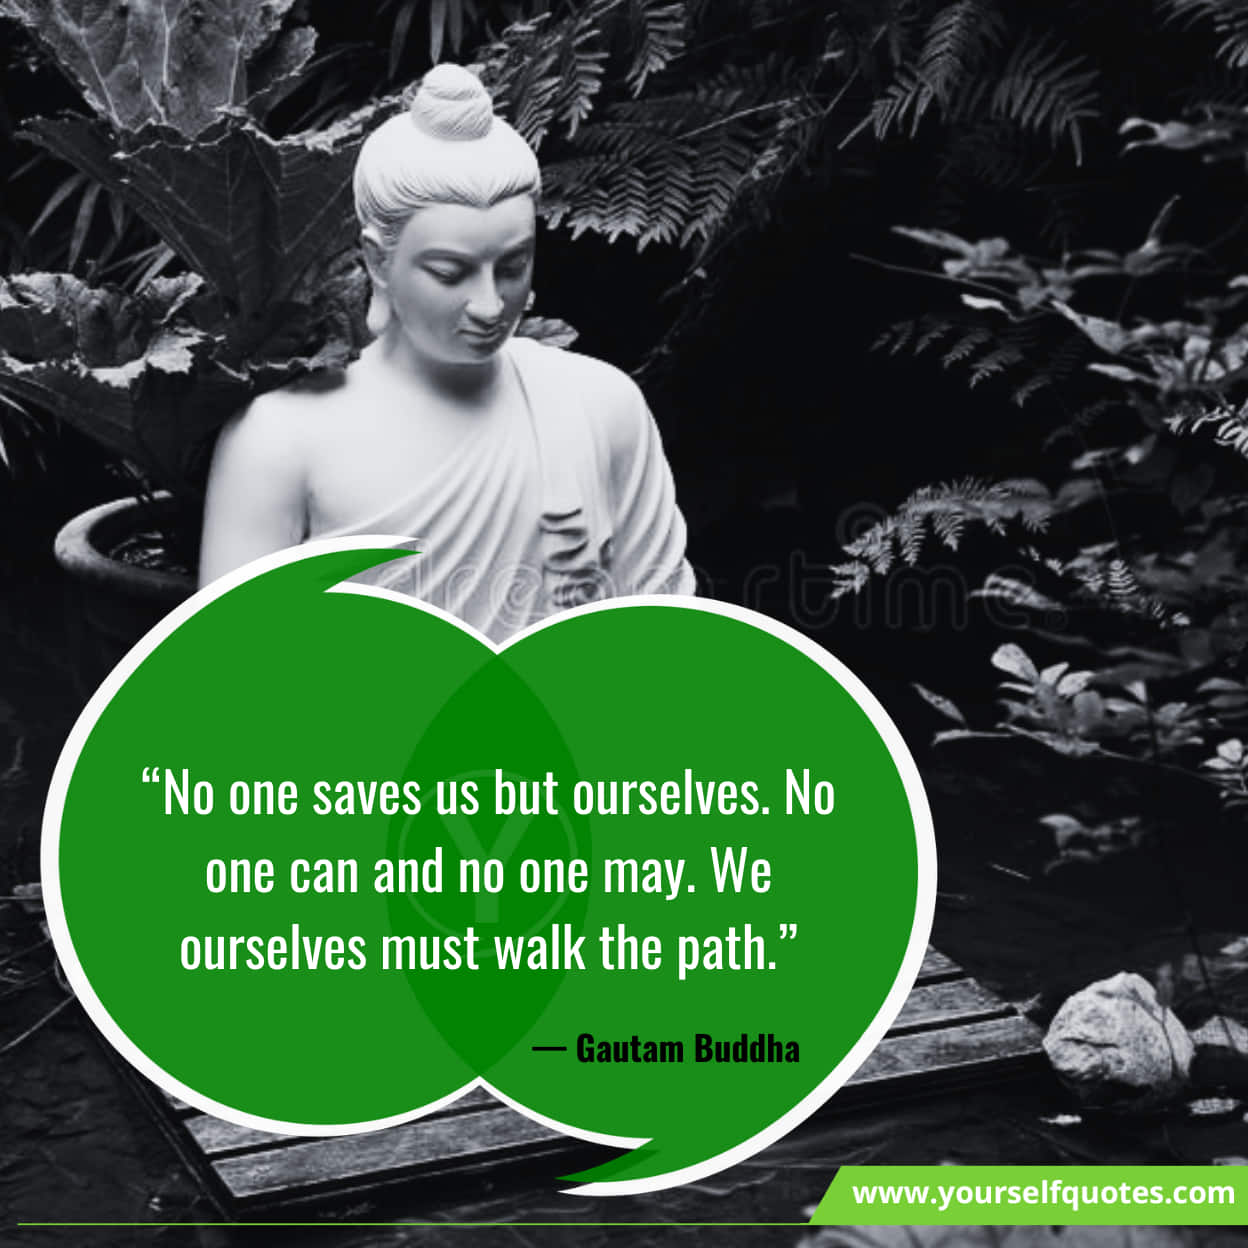 Gautam Buddha Quotes on Love